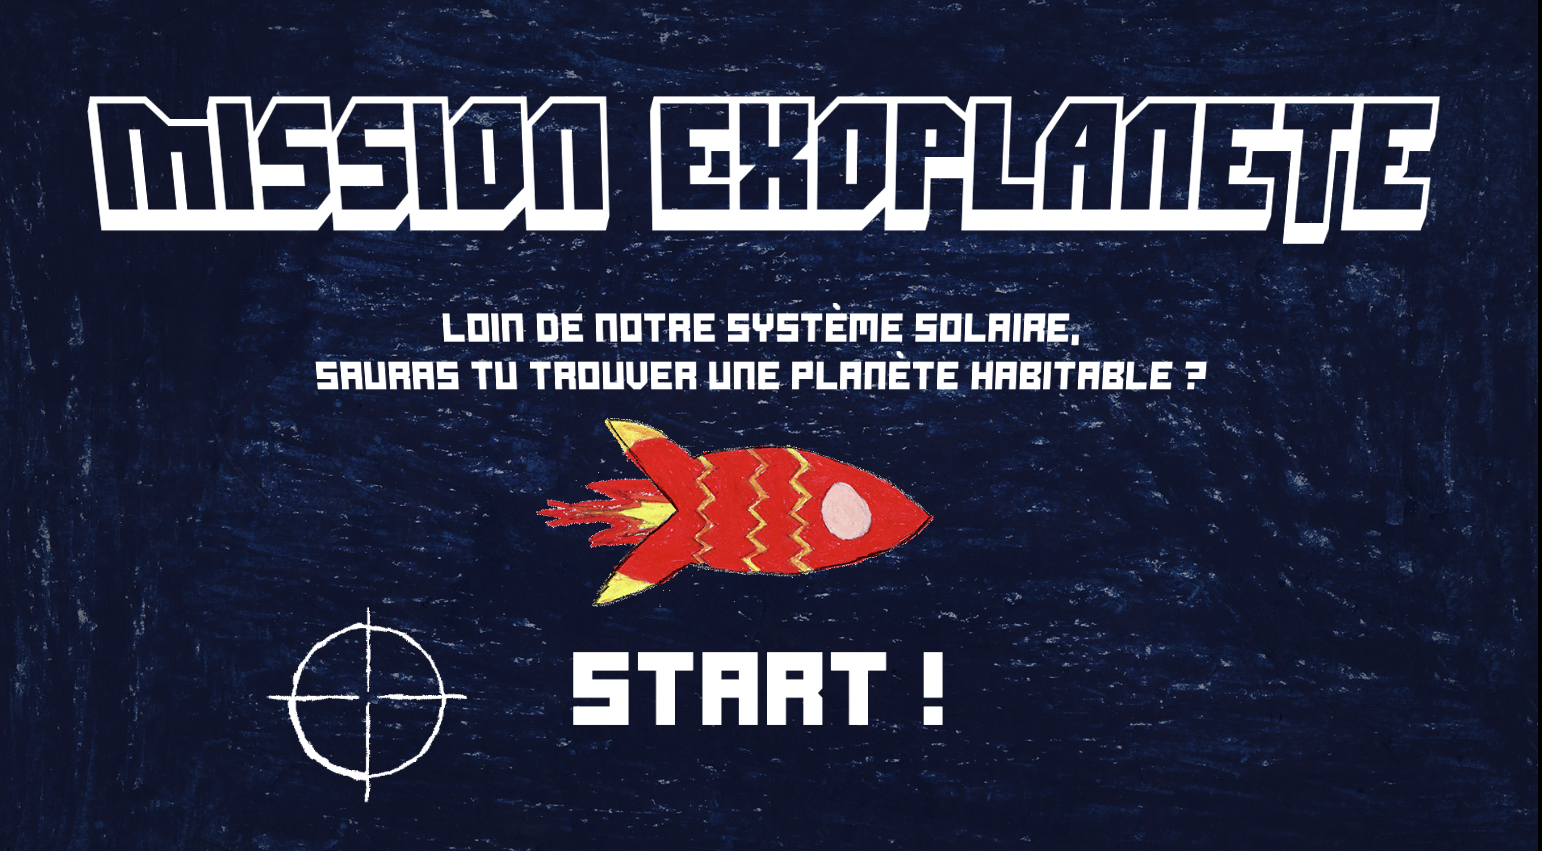 exoplanet-arcade-game-explornovastudio.png